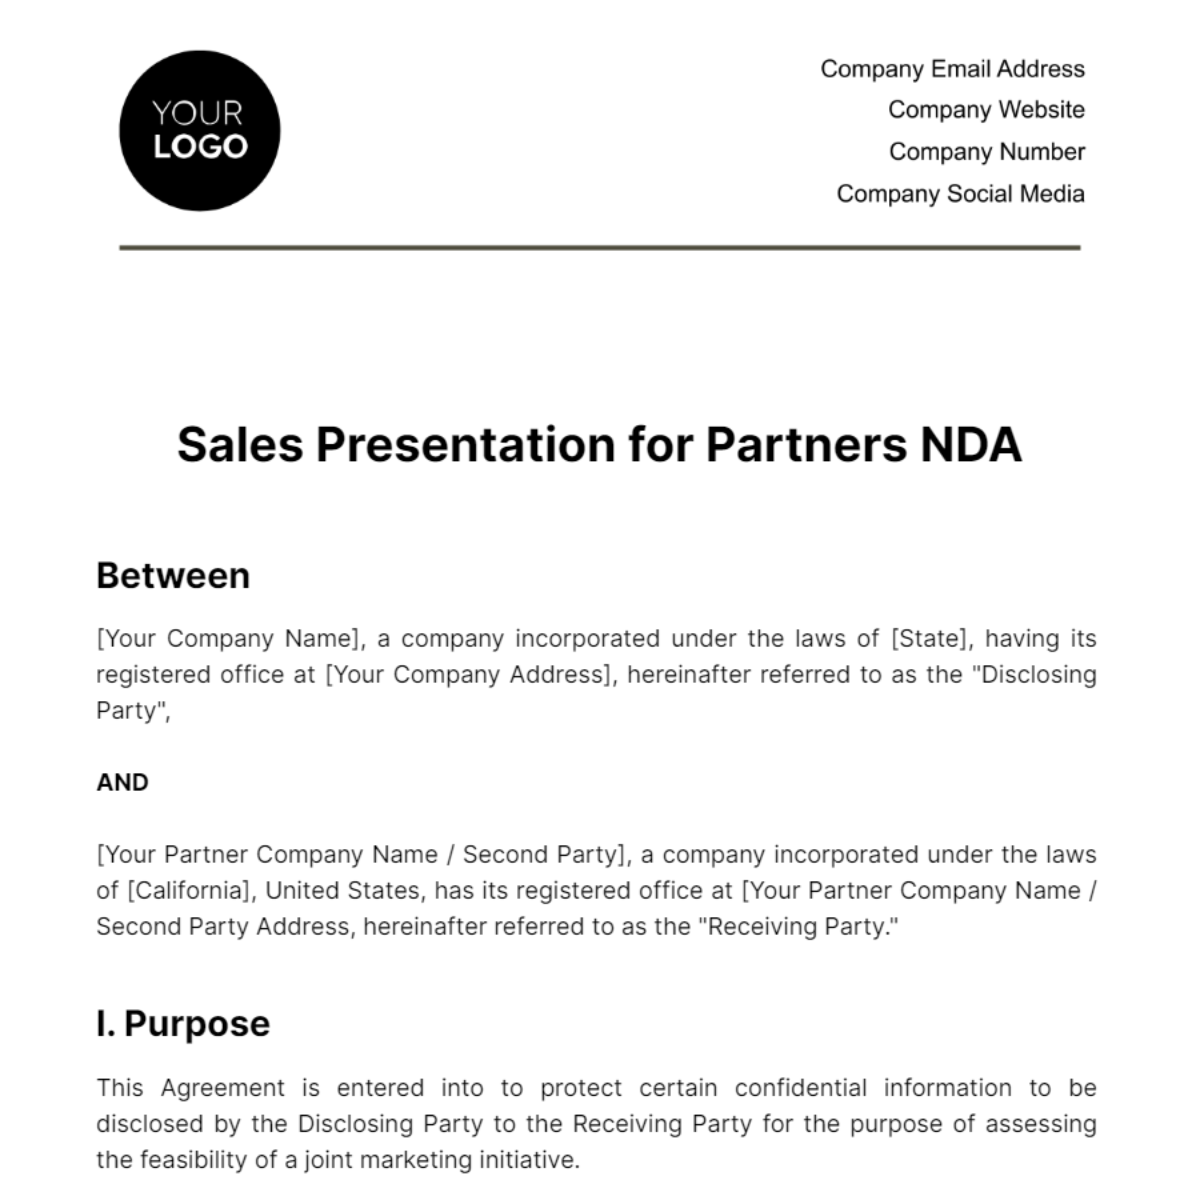 Sales Presentation for Partners NDA Template